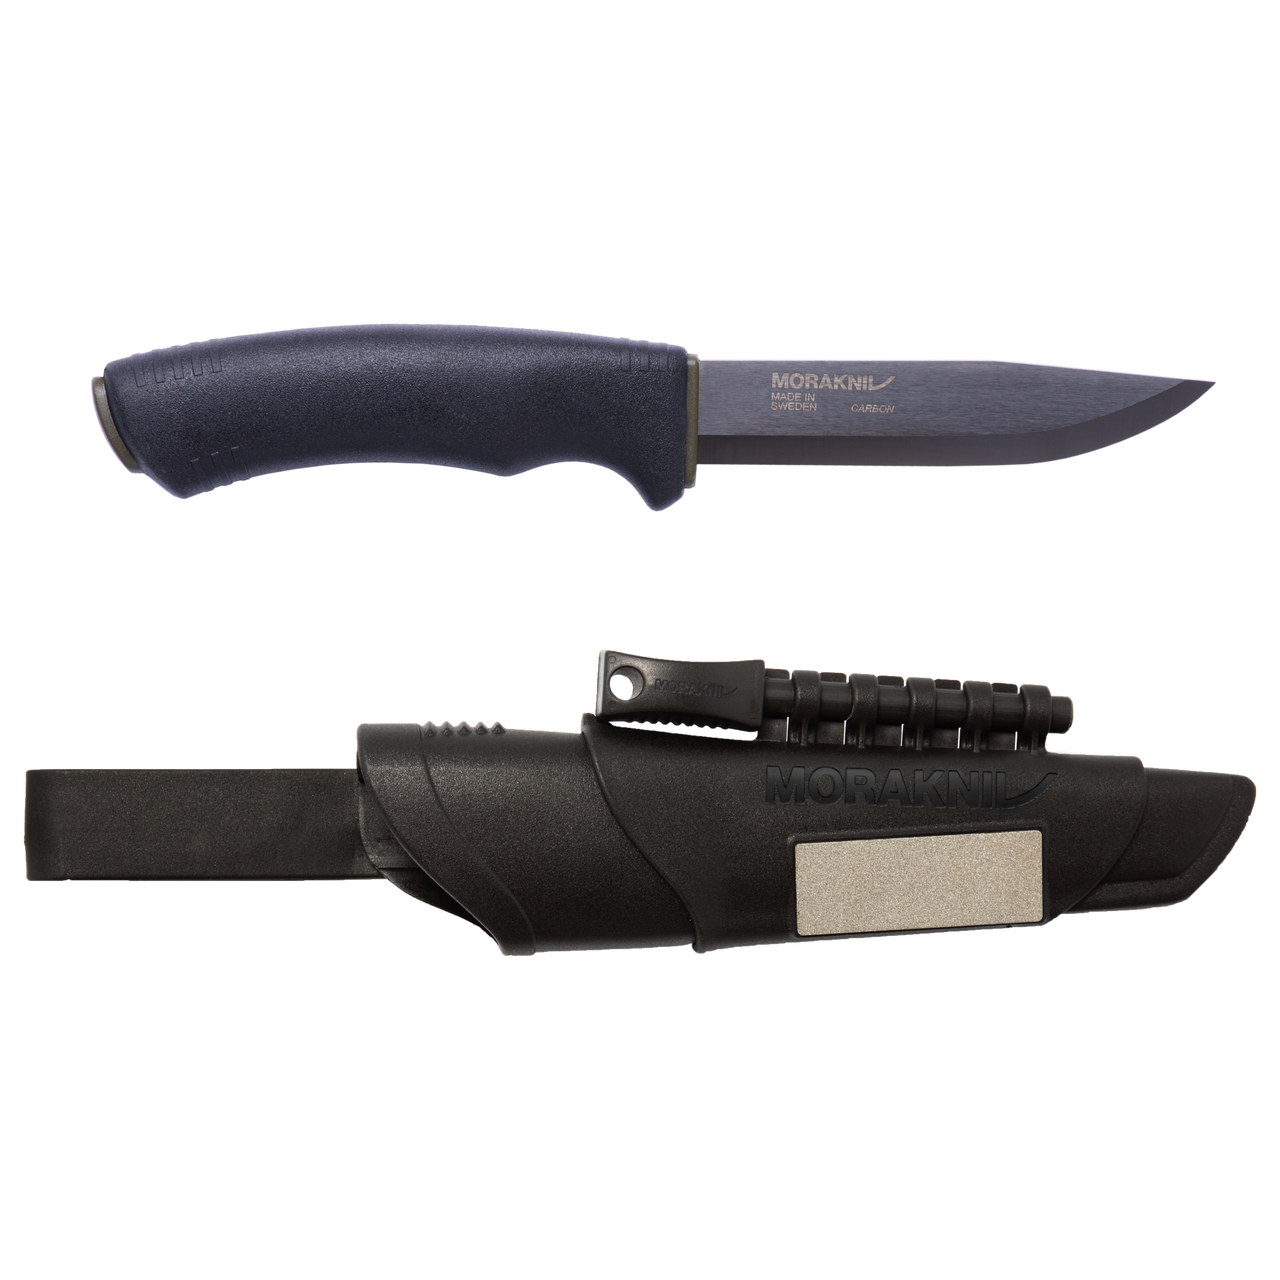 Morakniv Bushcraft BlackBlade Survival Knife with Fire Starter - Carbon  Steel Blade, Black Rubber Handle, Black Sheath